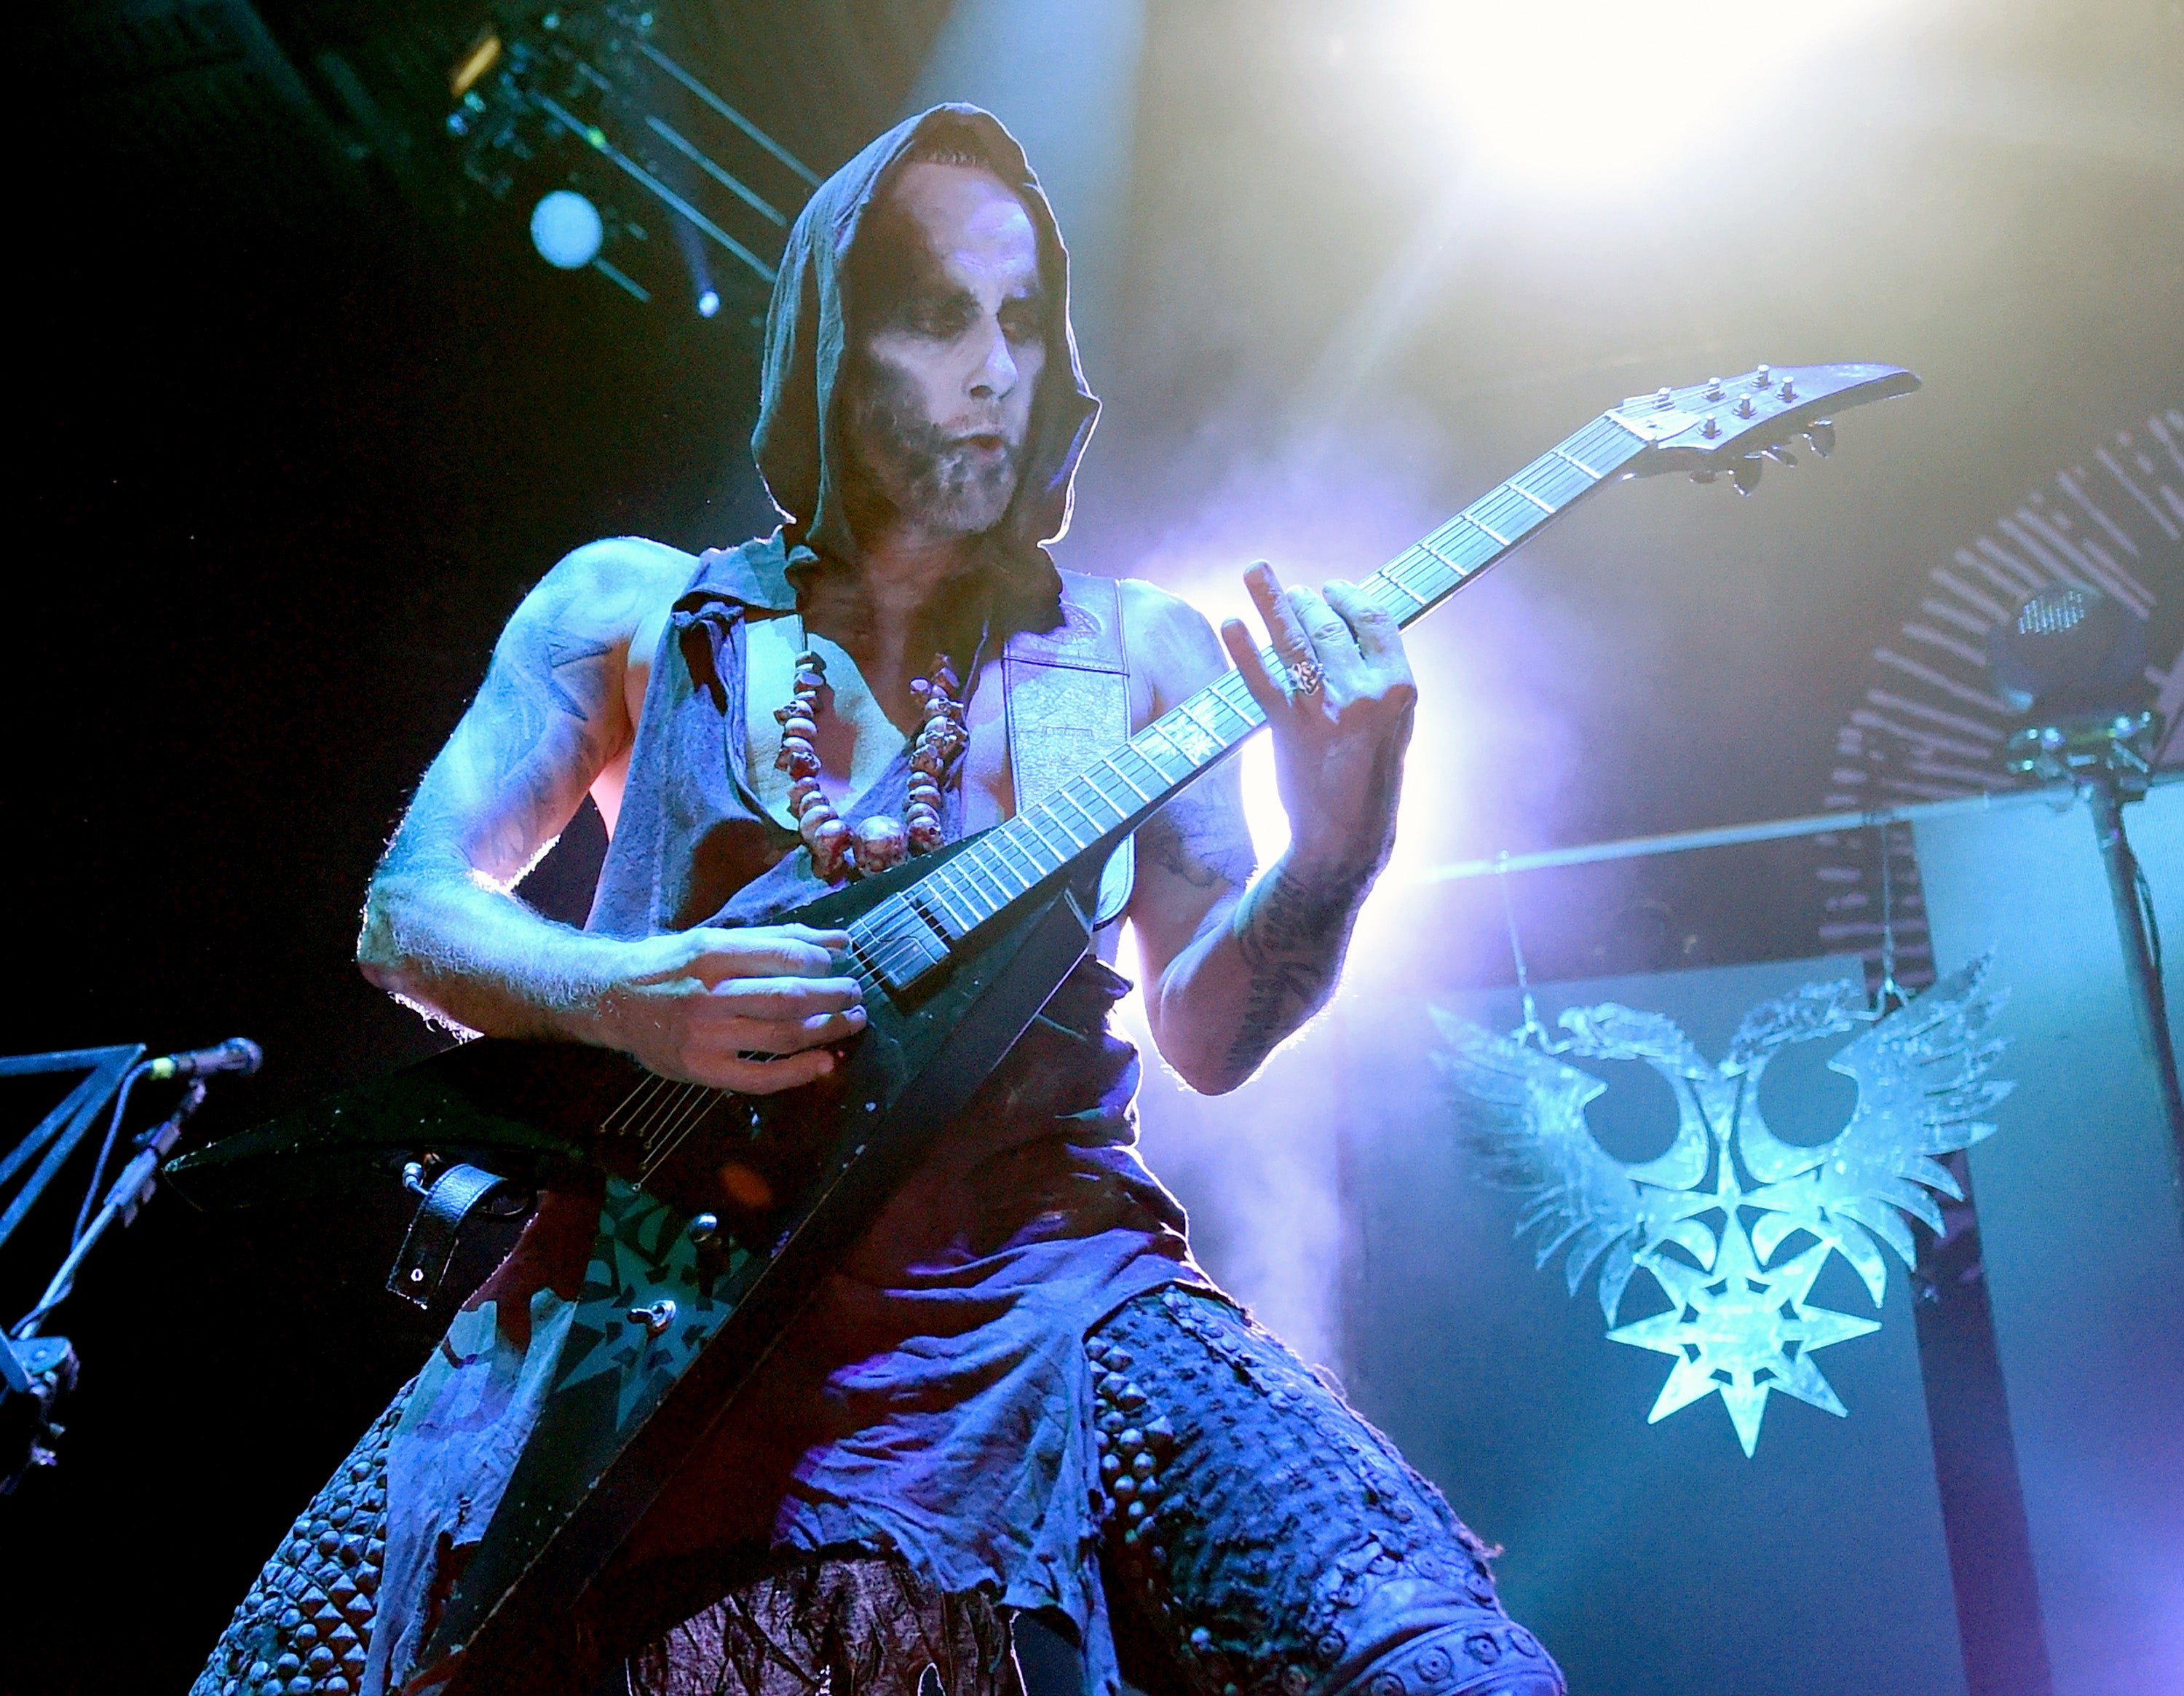 Frontman Adam “Nergal” Darski of Behemoth performs at The Joint inside the Hard Rock Hotel & Casino on 4 August, 2017 in Las Vegas, Nevada